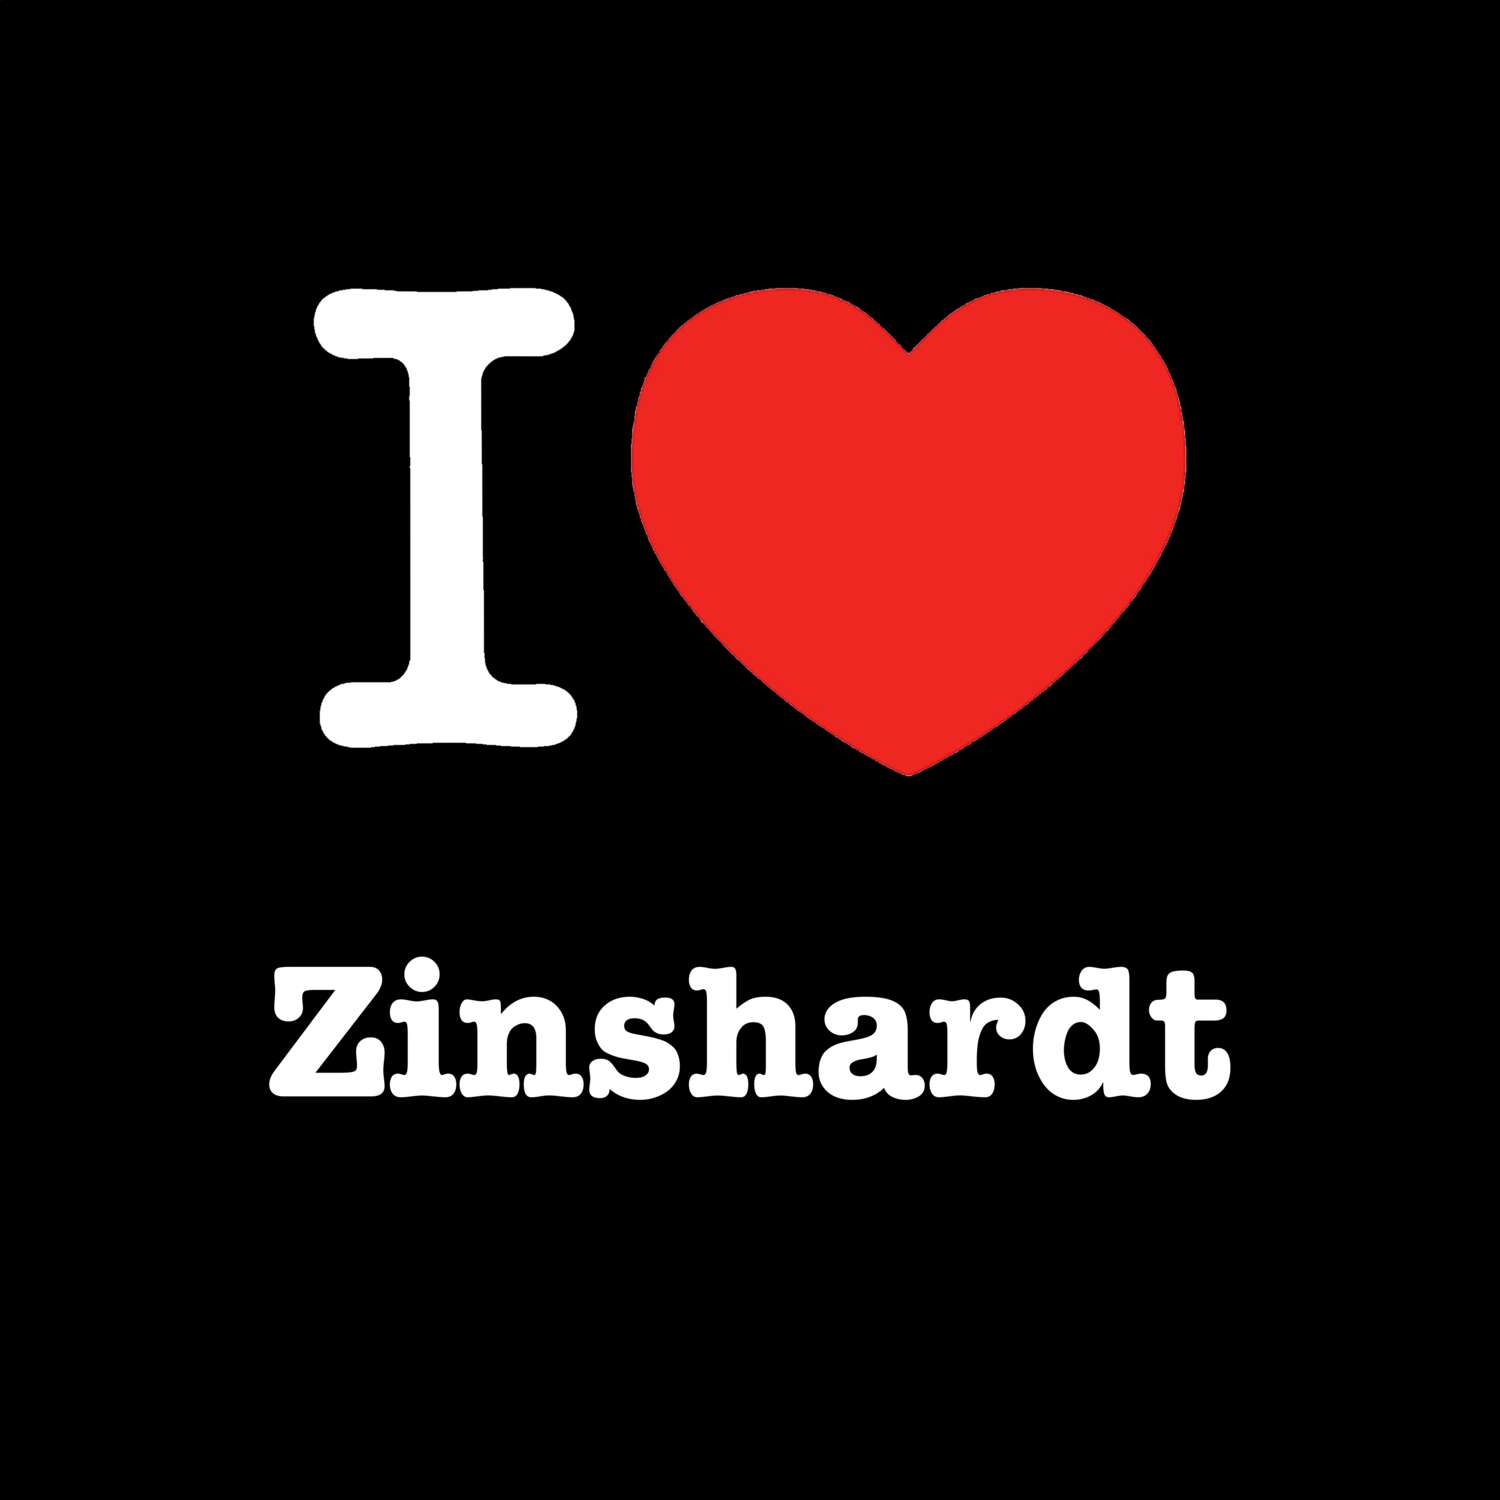 Zinshardt T-Shirt »I love«